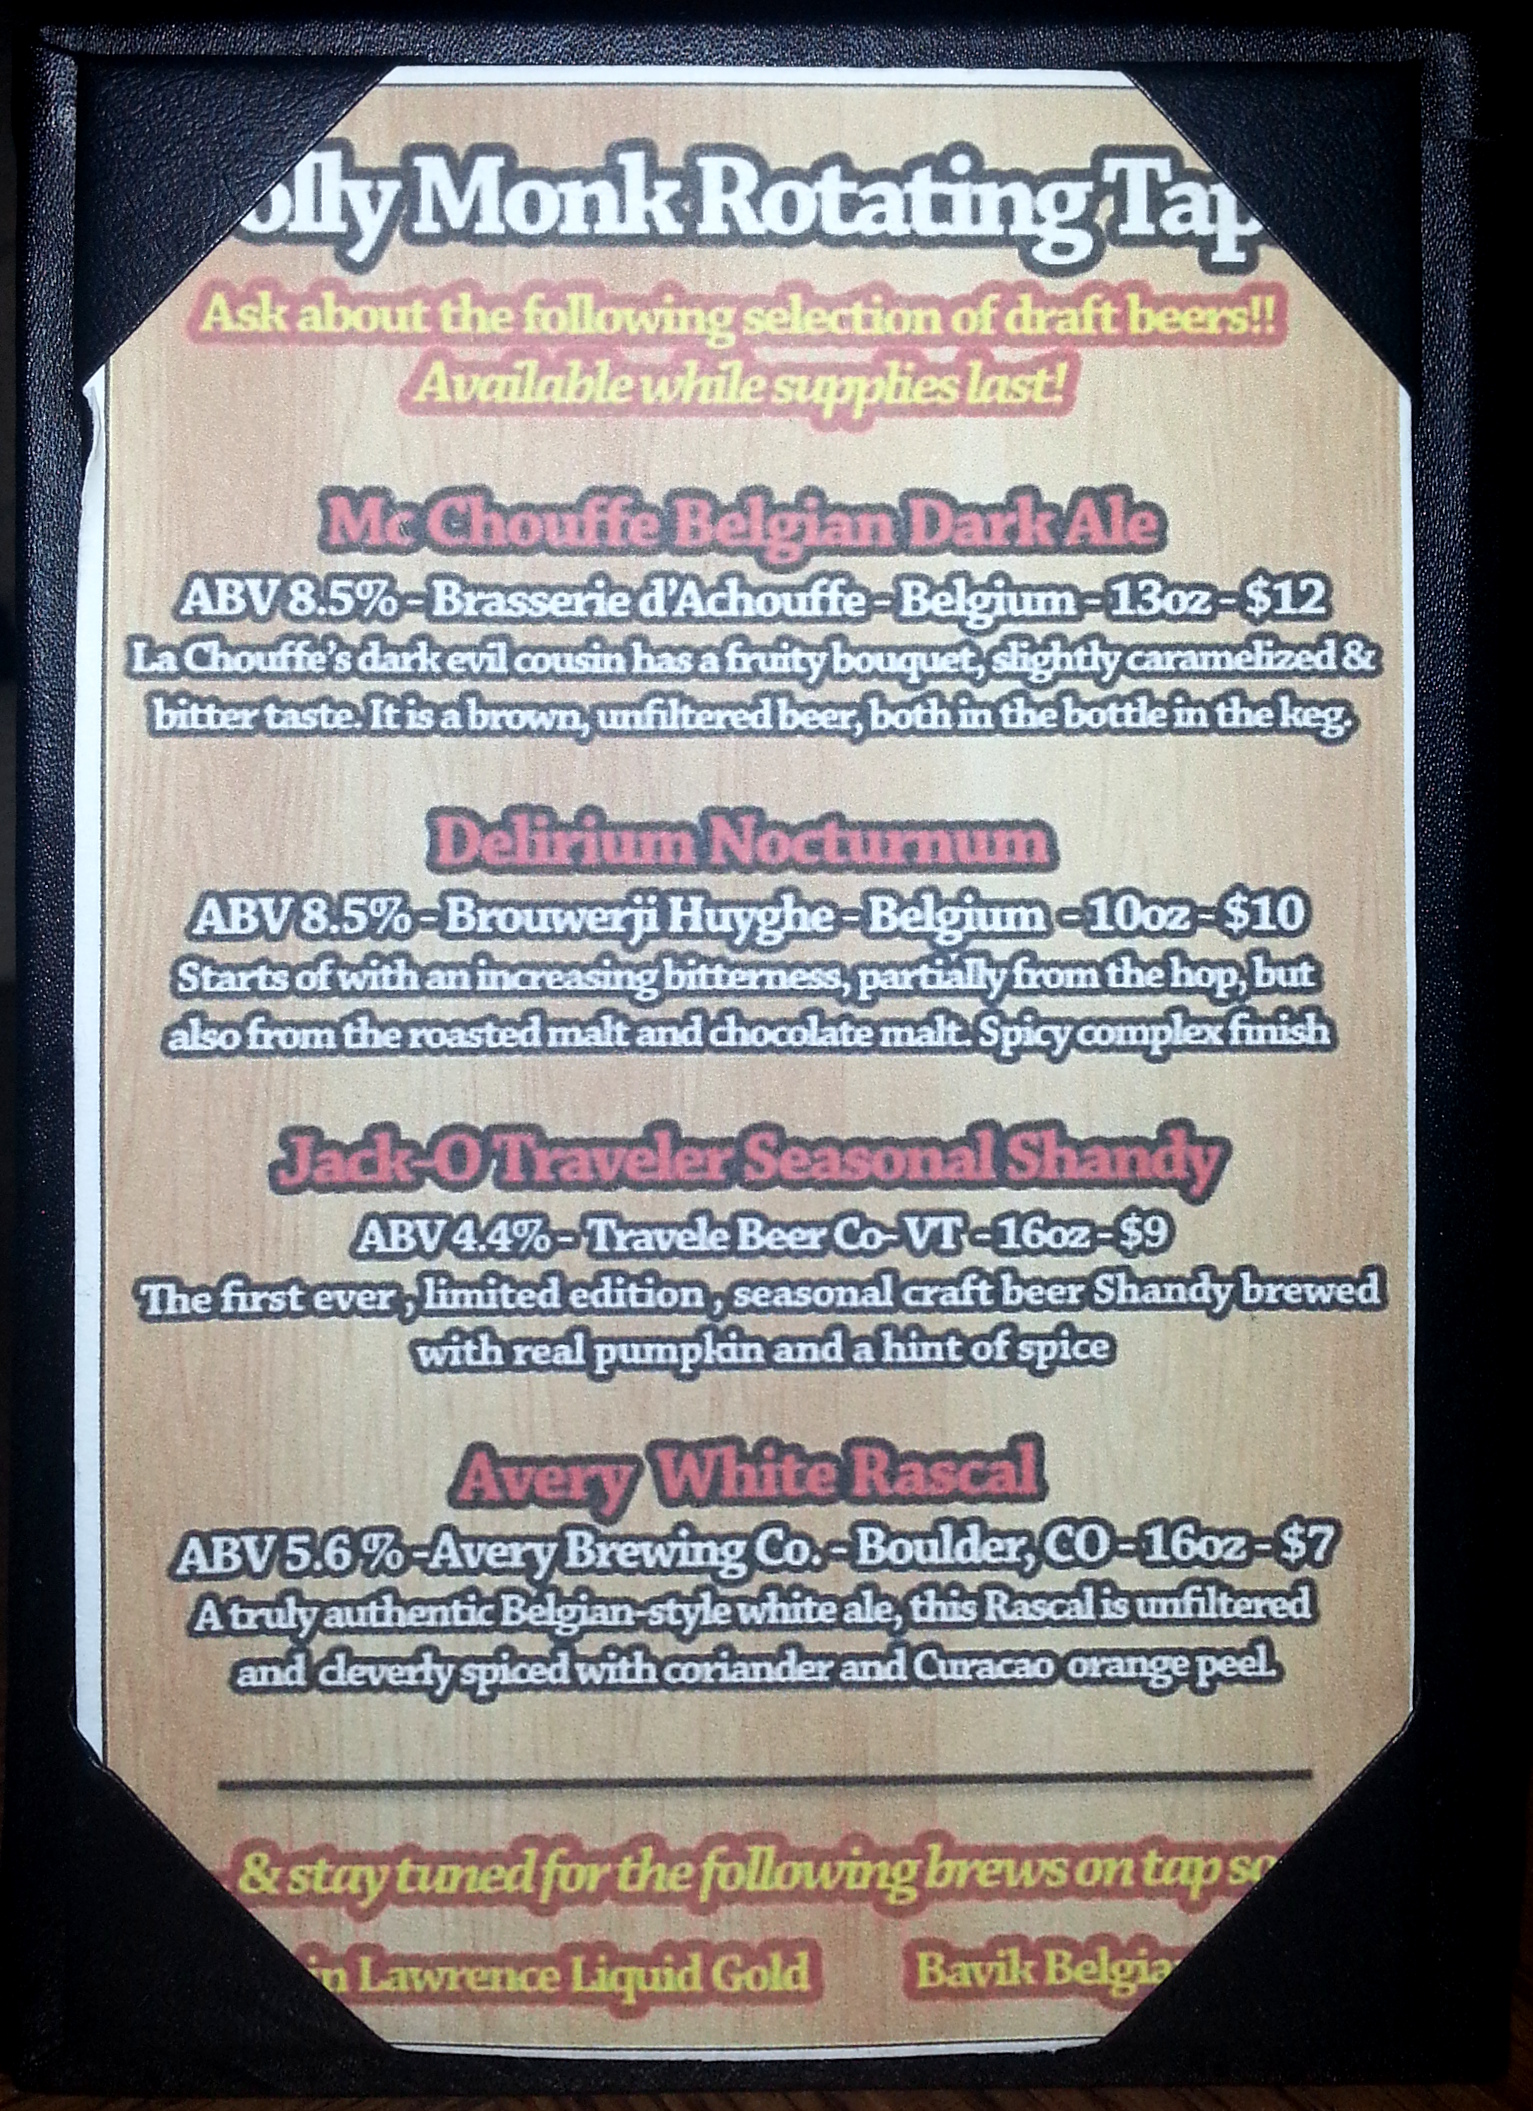 Jolly Monk menu